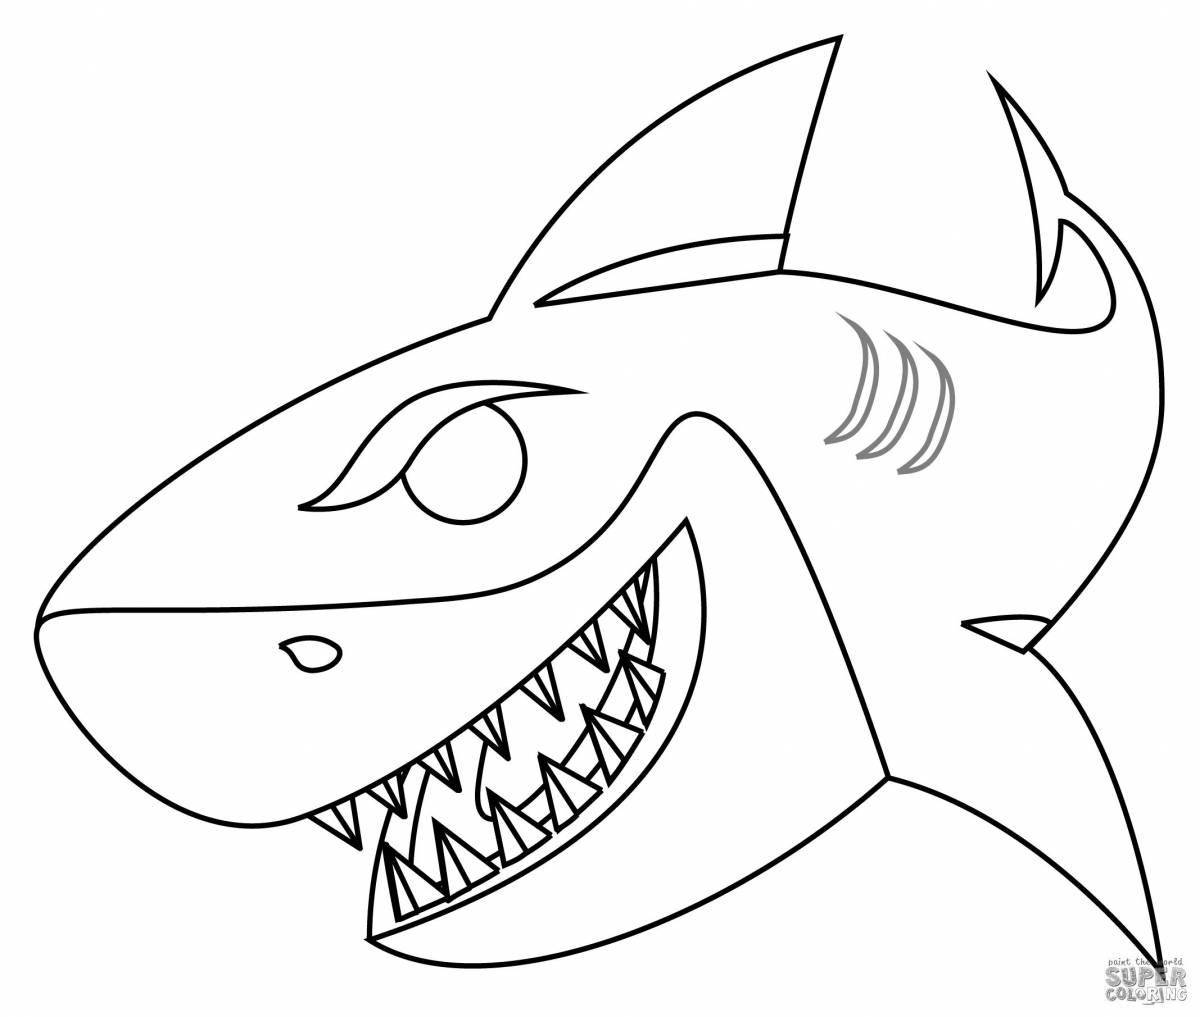 Coloring big angry shark